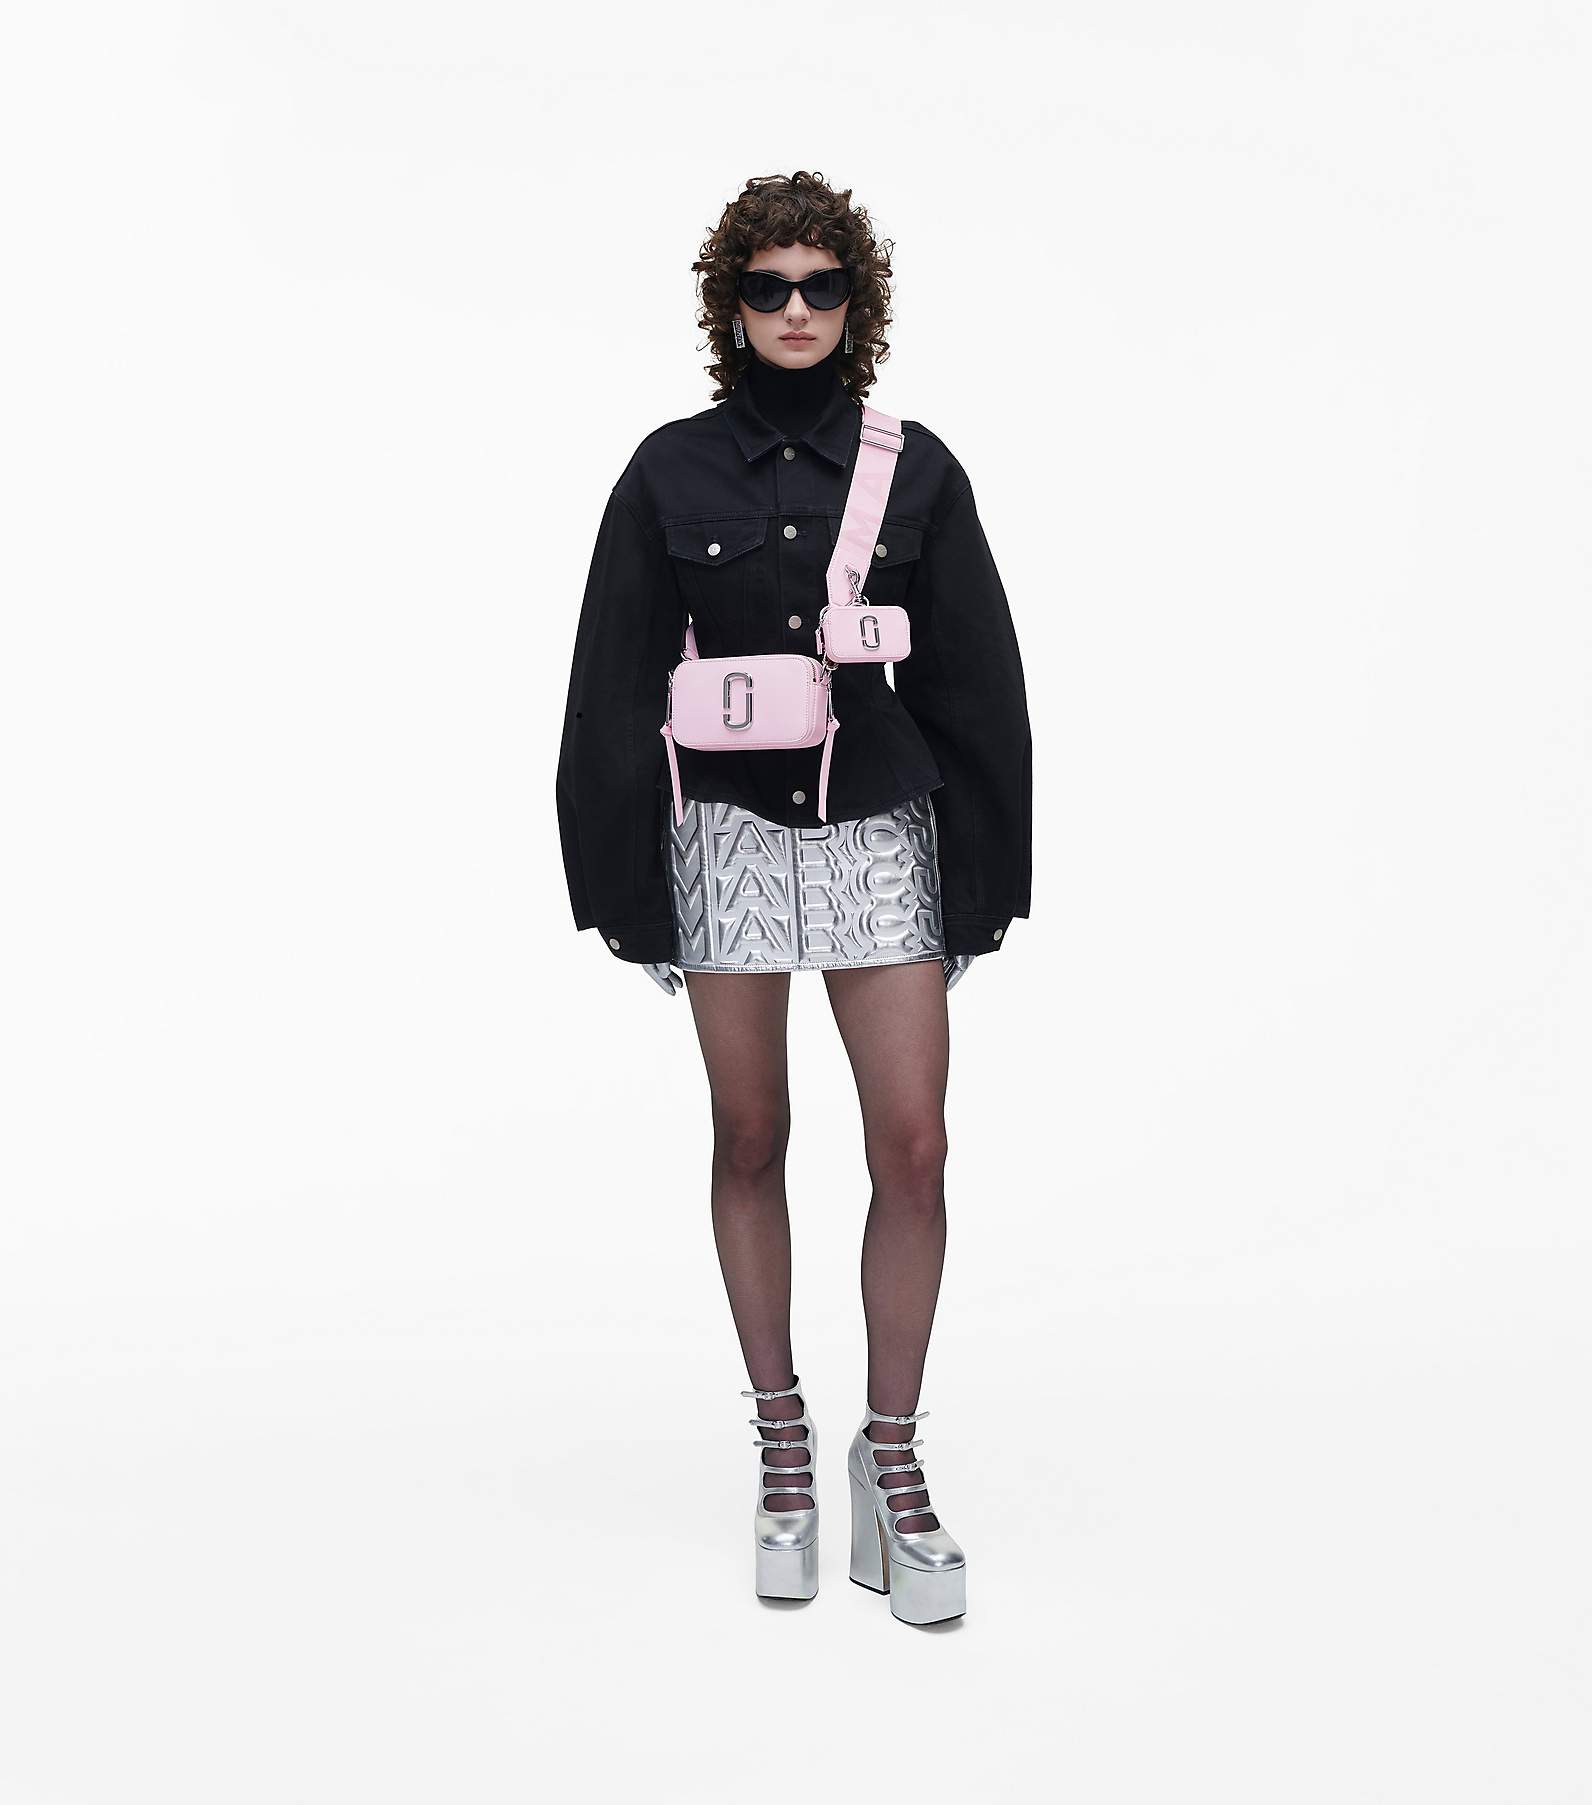 Go Versatile with Marc Jacobs Snapshot Bags in 2019